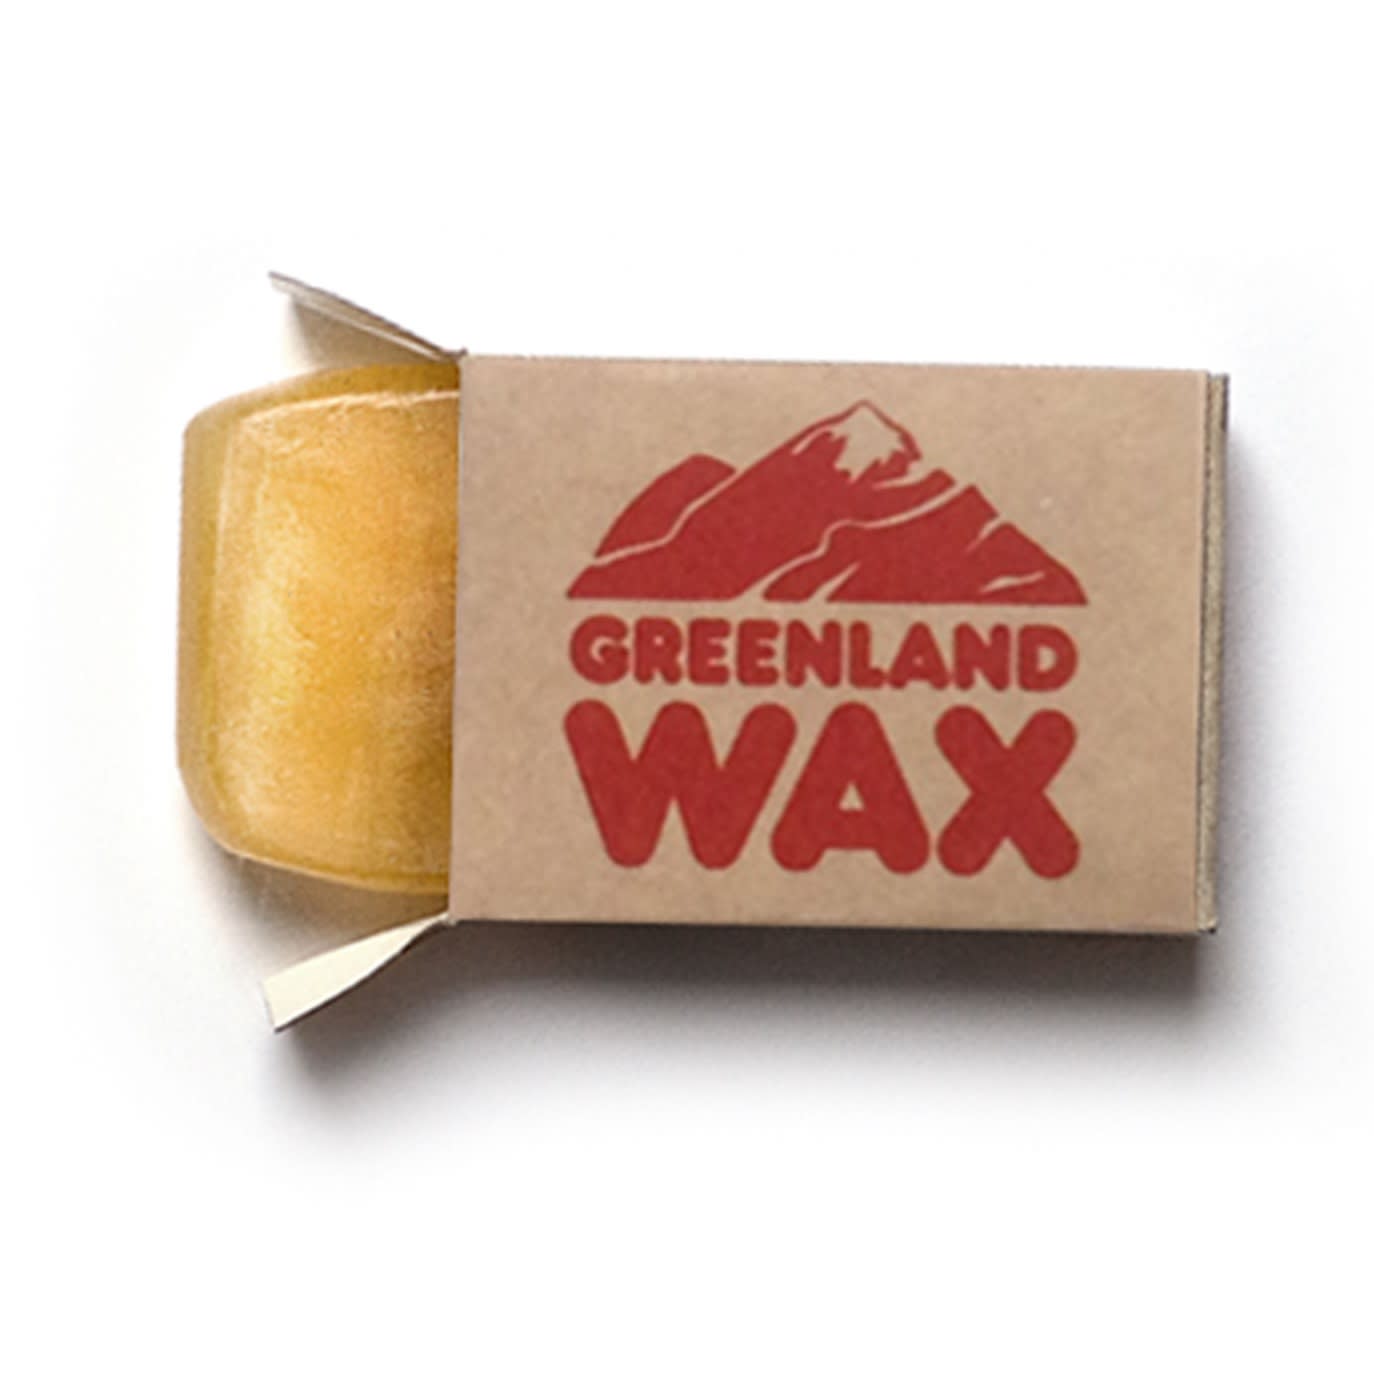 greenland wax travel pack